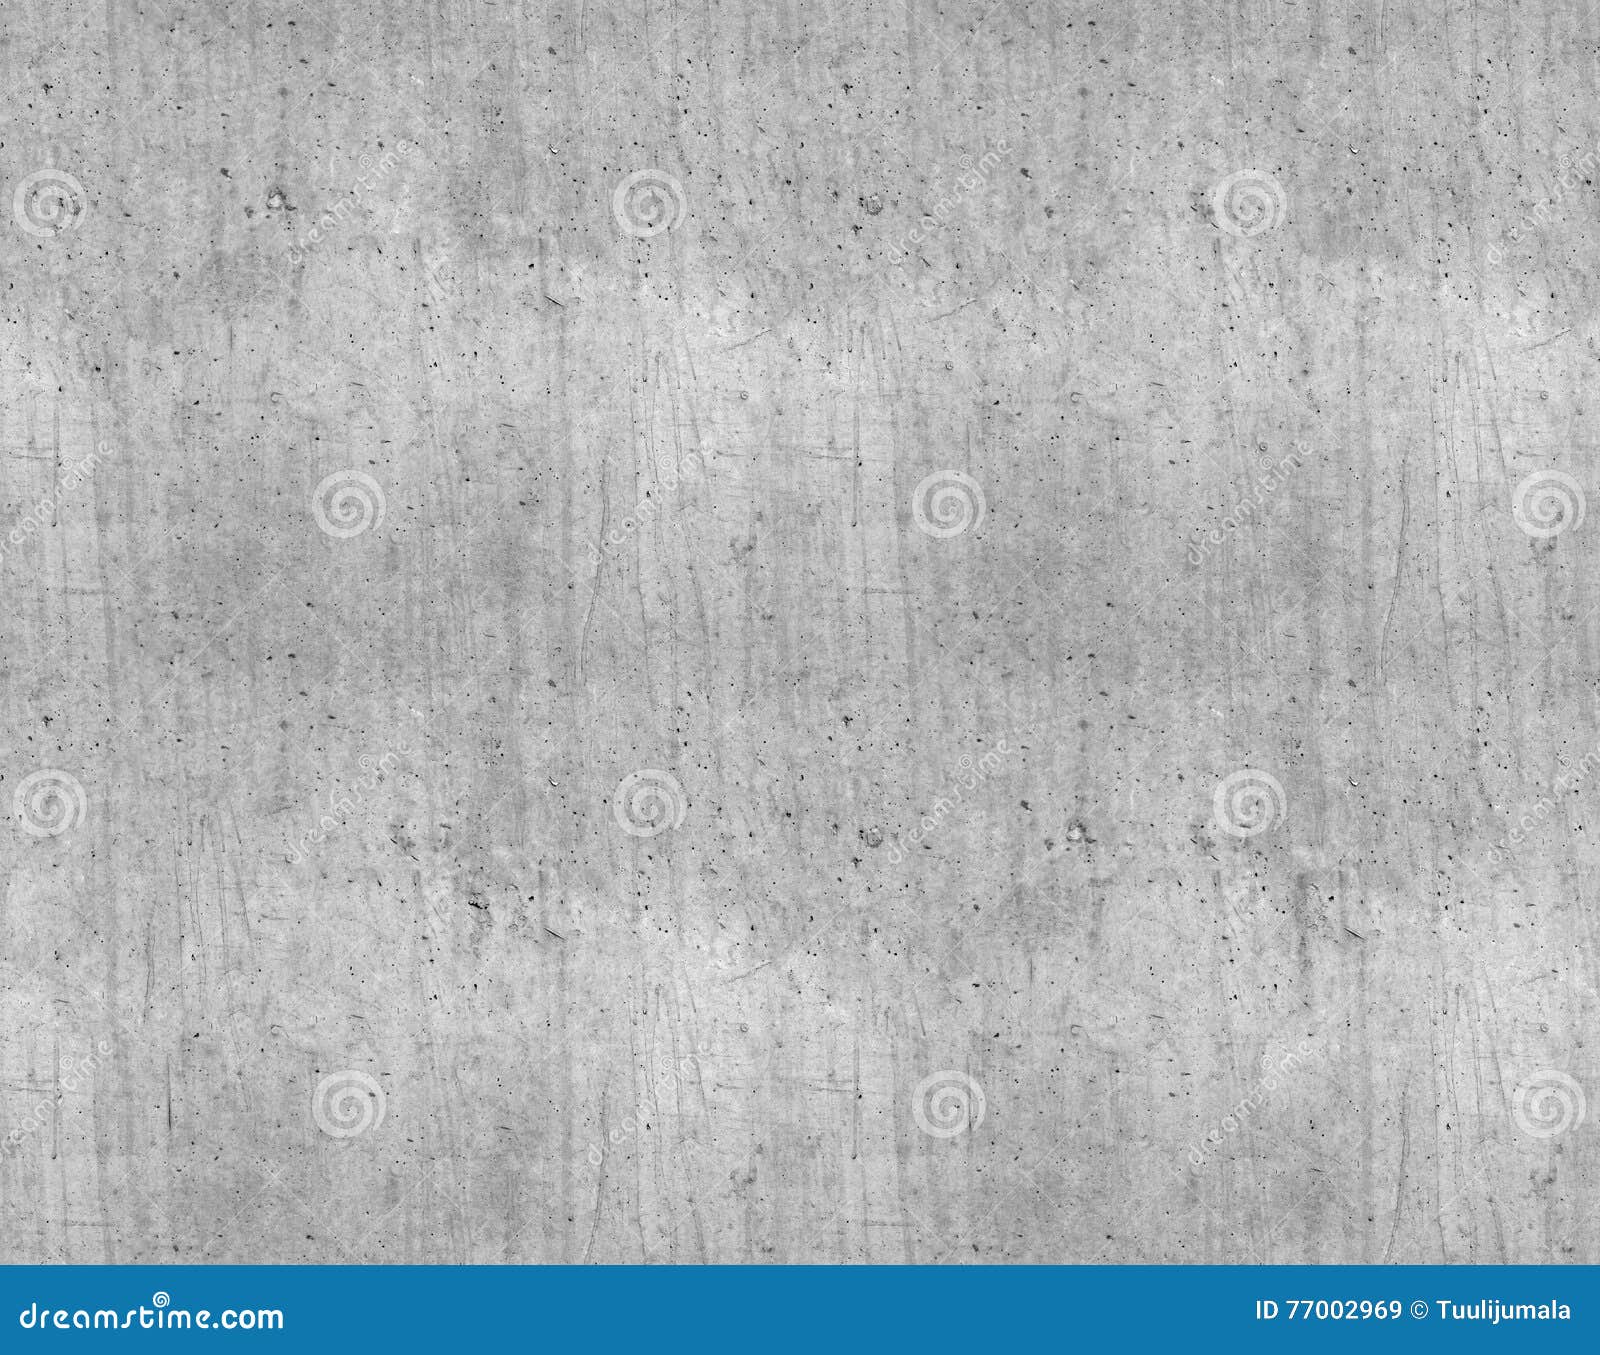 Seamless concrete texture stock image. Image of endless - 77002969